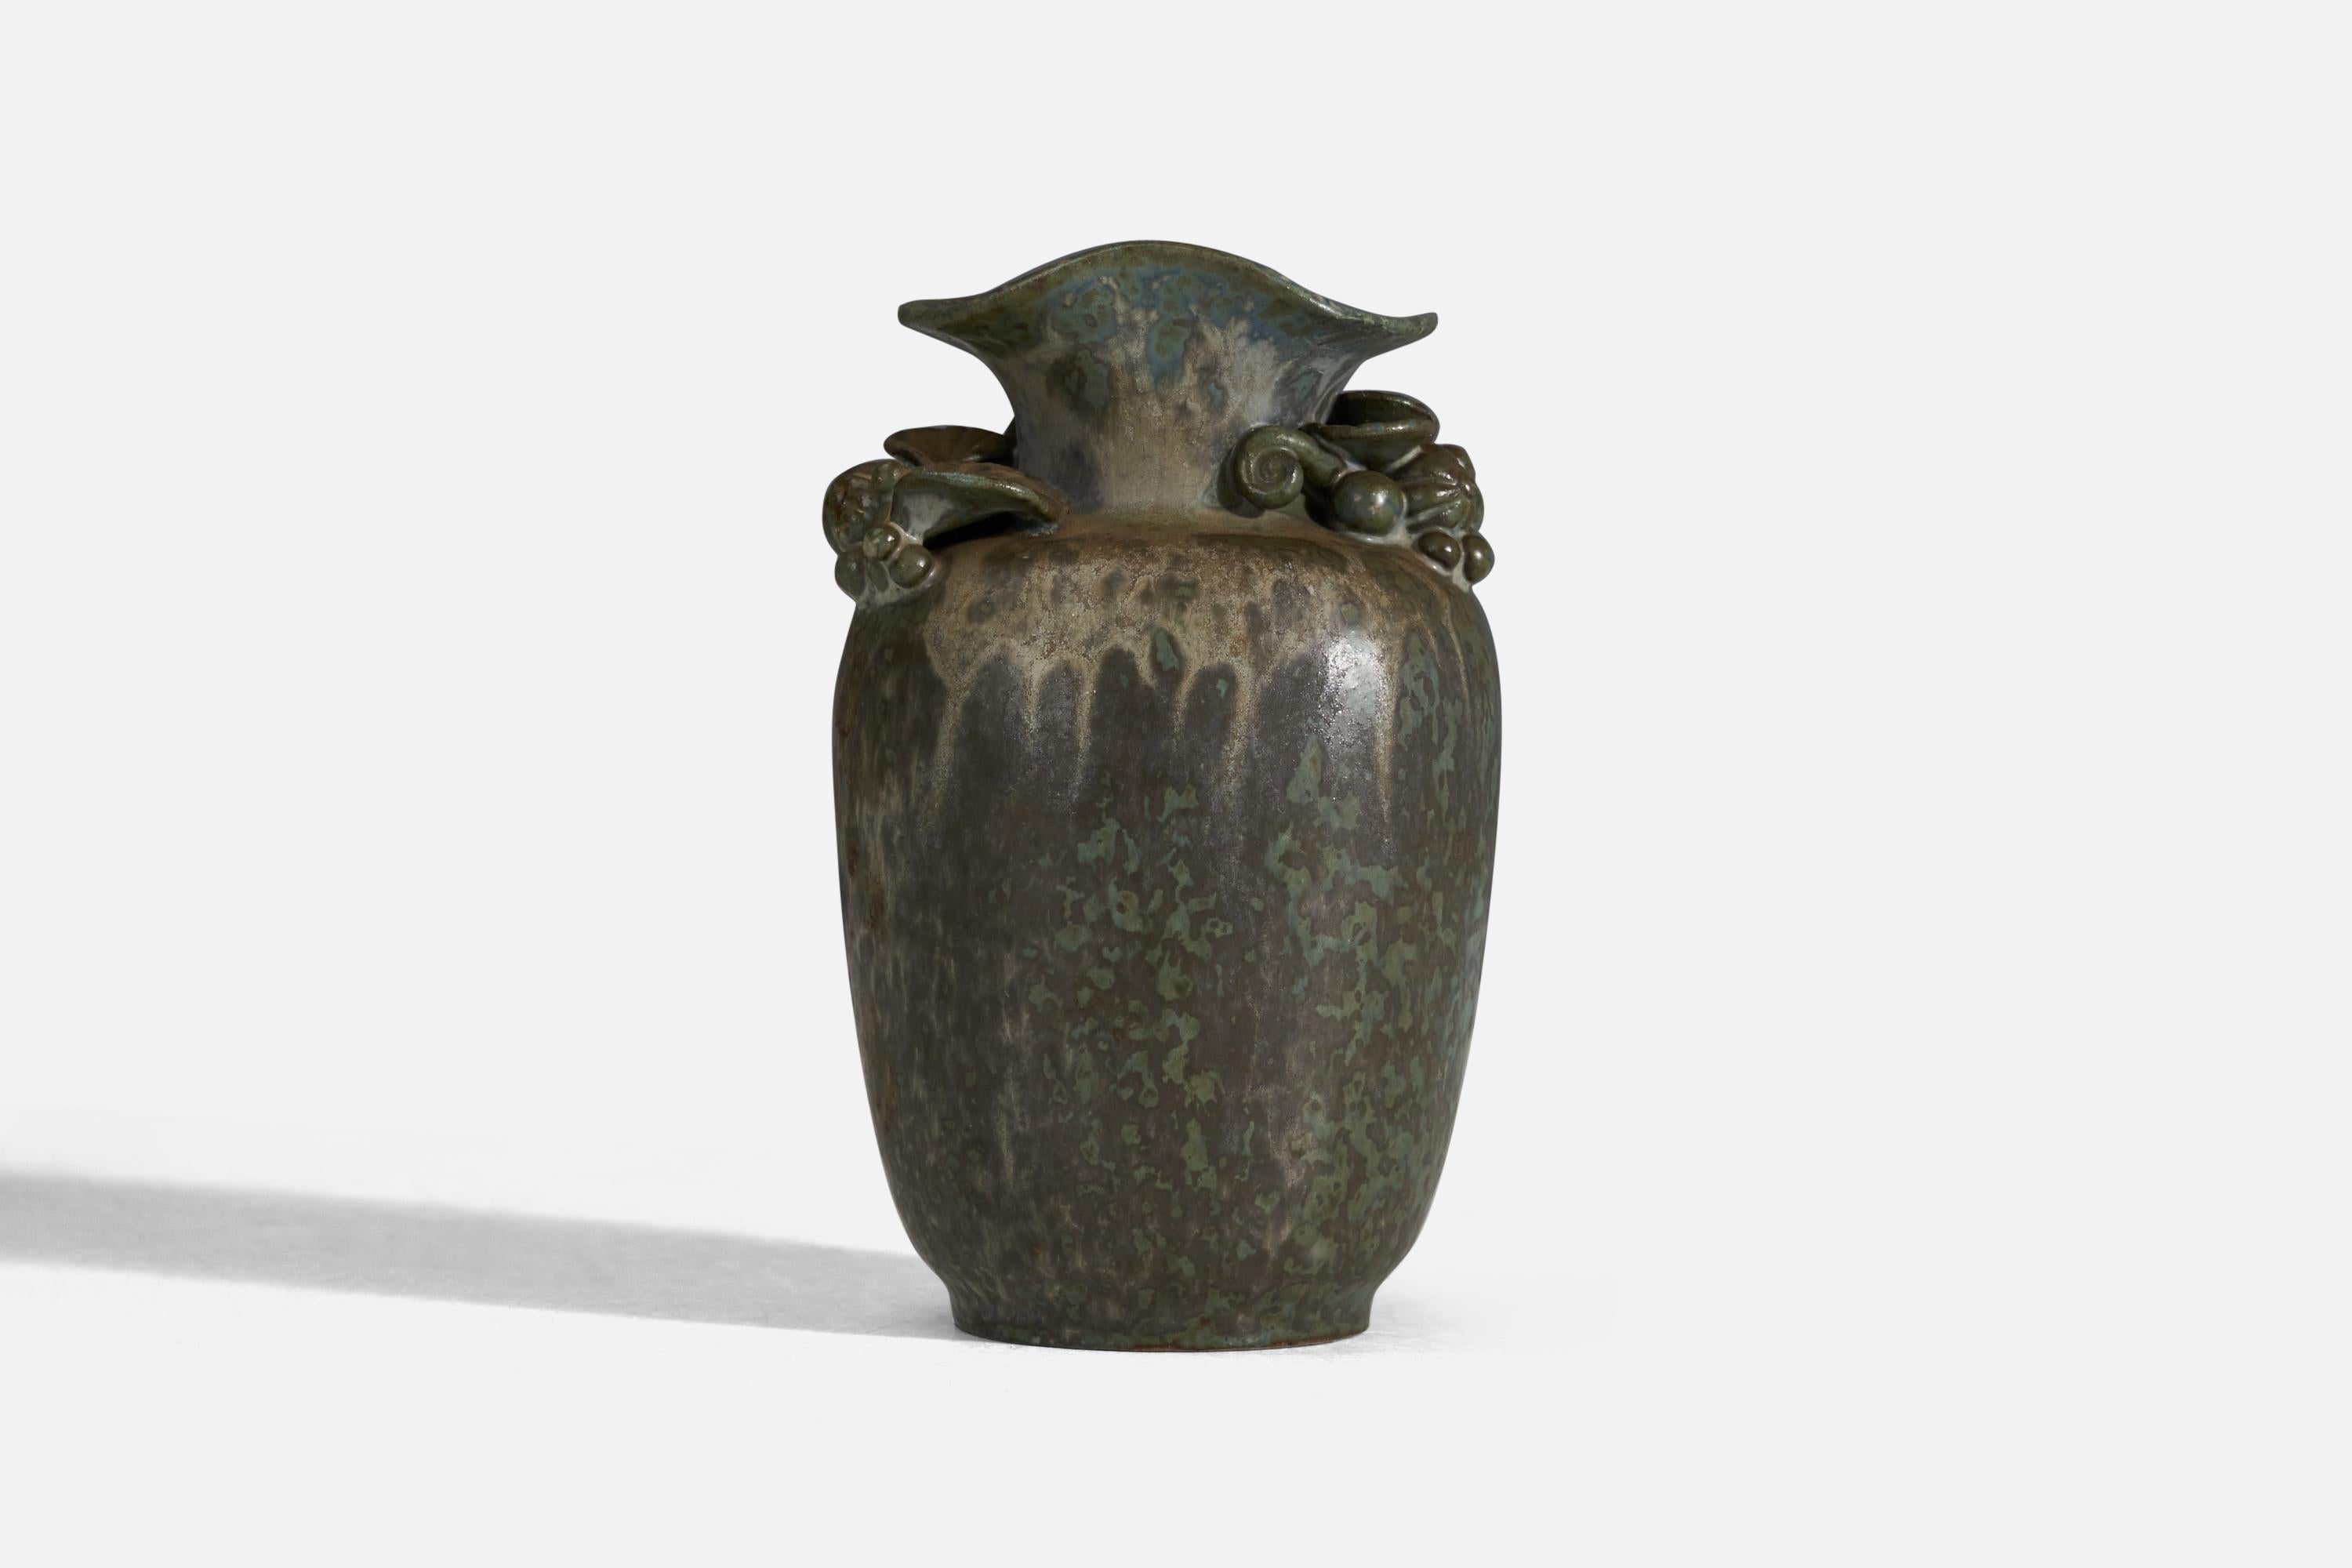 A green and blue glazed stoneware vase designed and produced by Arne Bang, Vase, Denmark, 1940s.